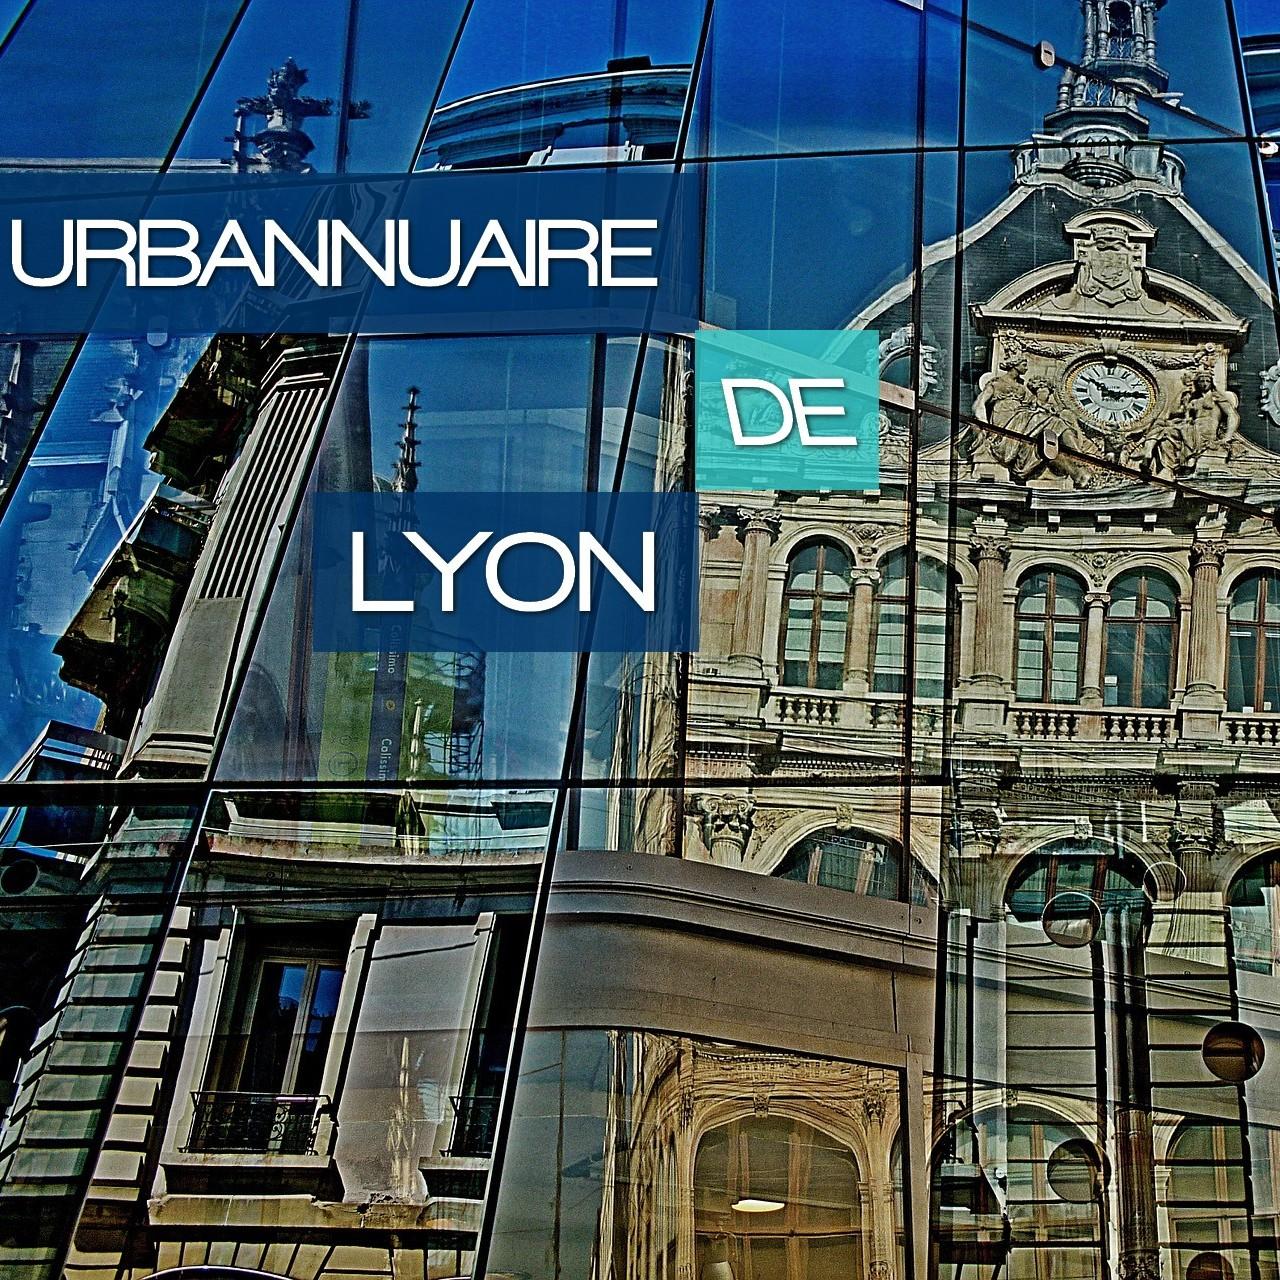 Urbannuaire de LYON